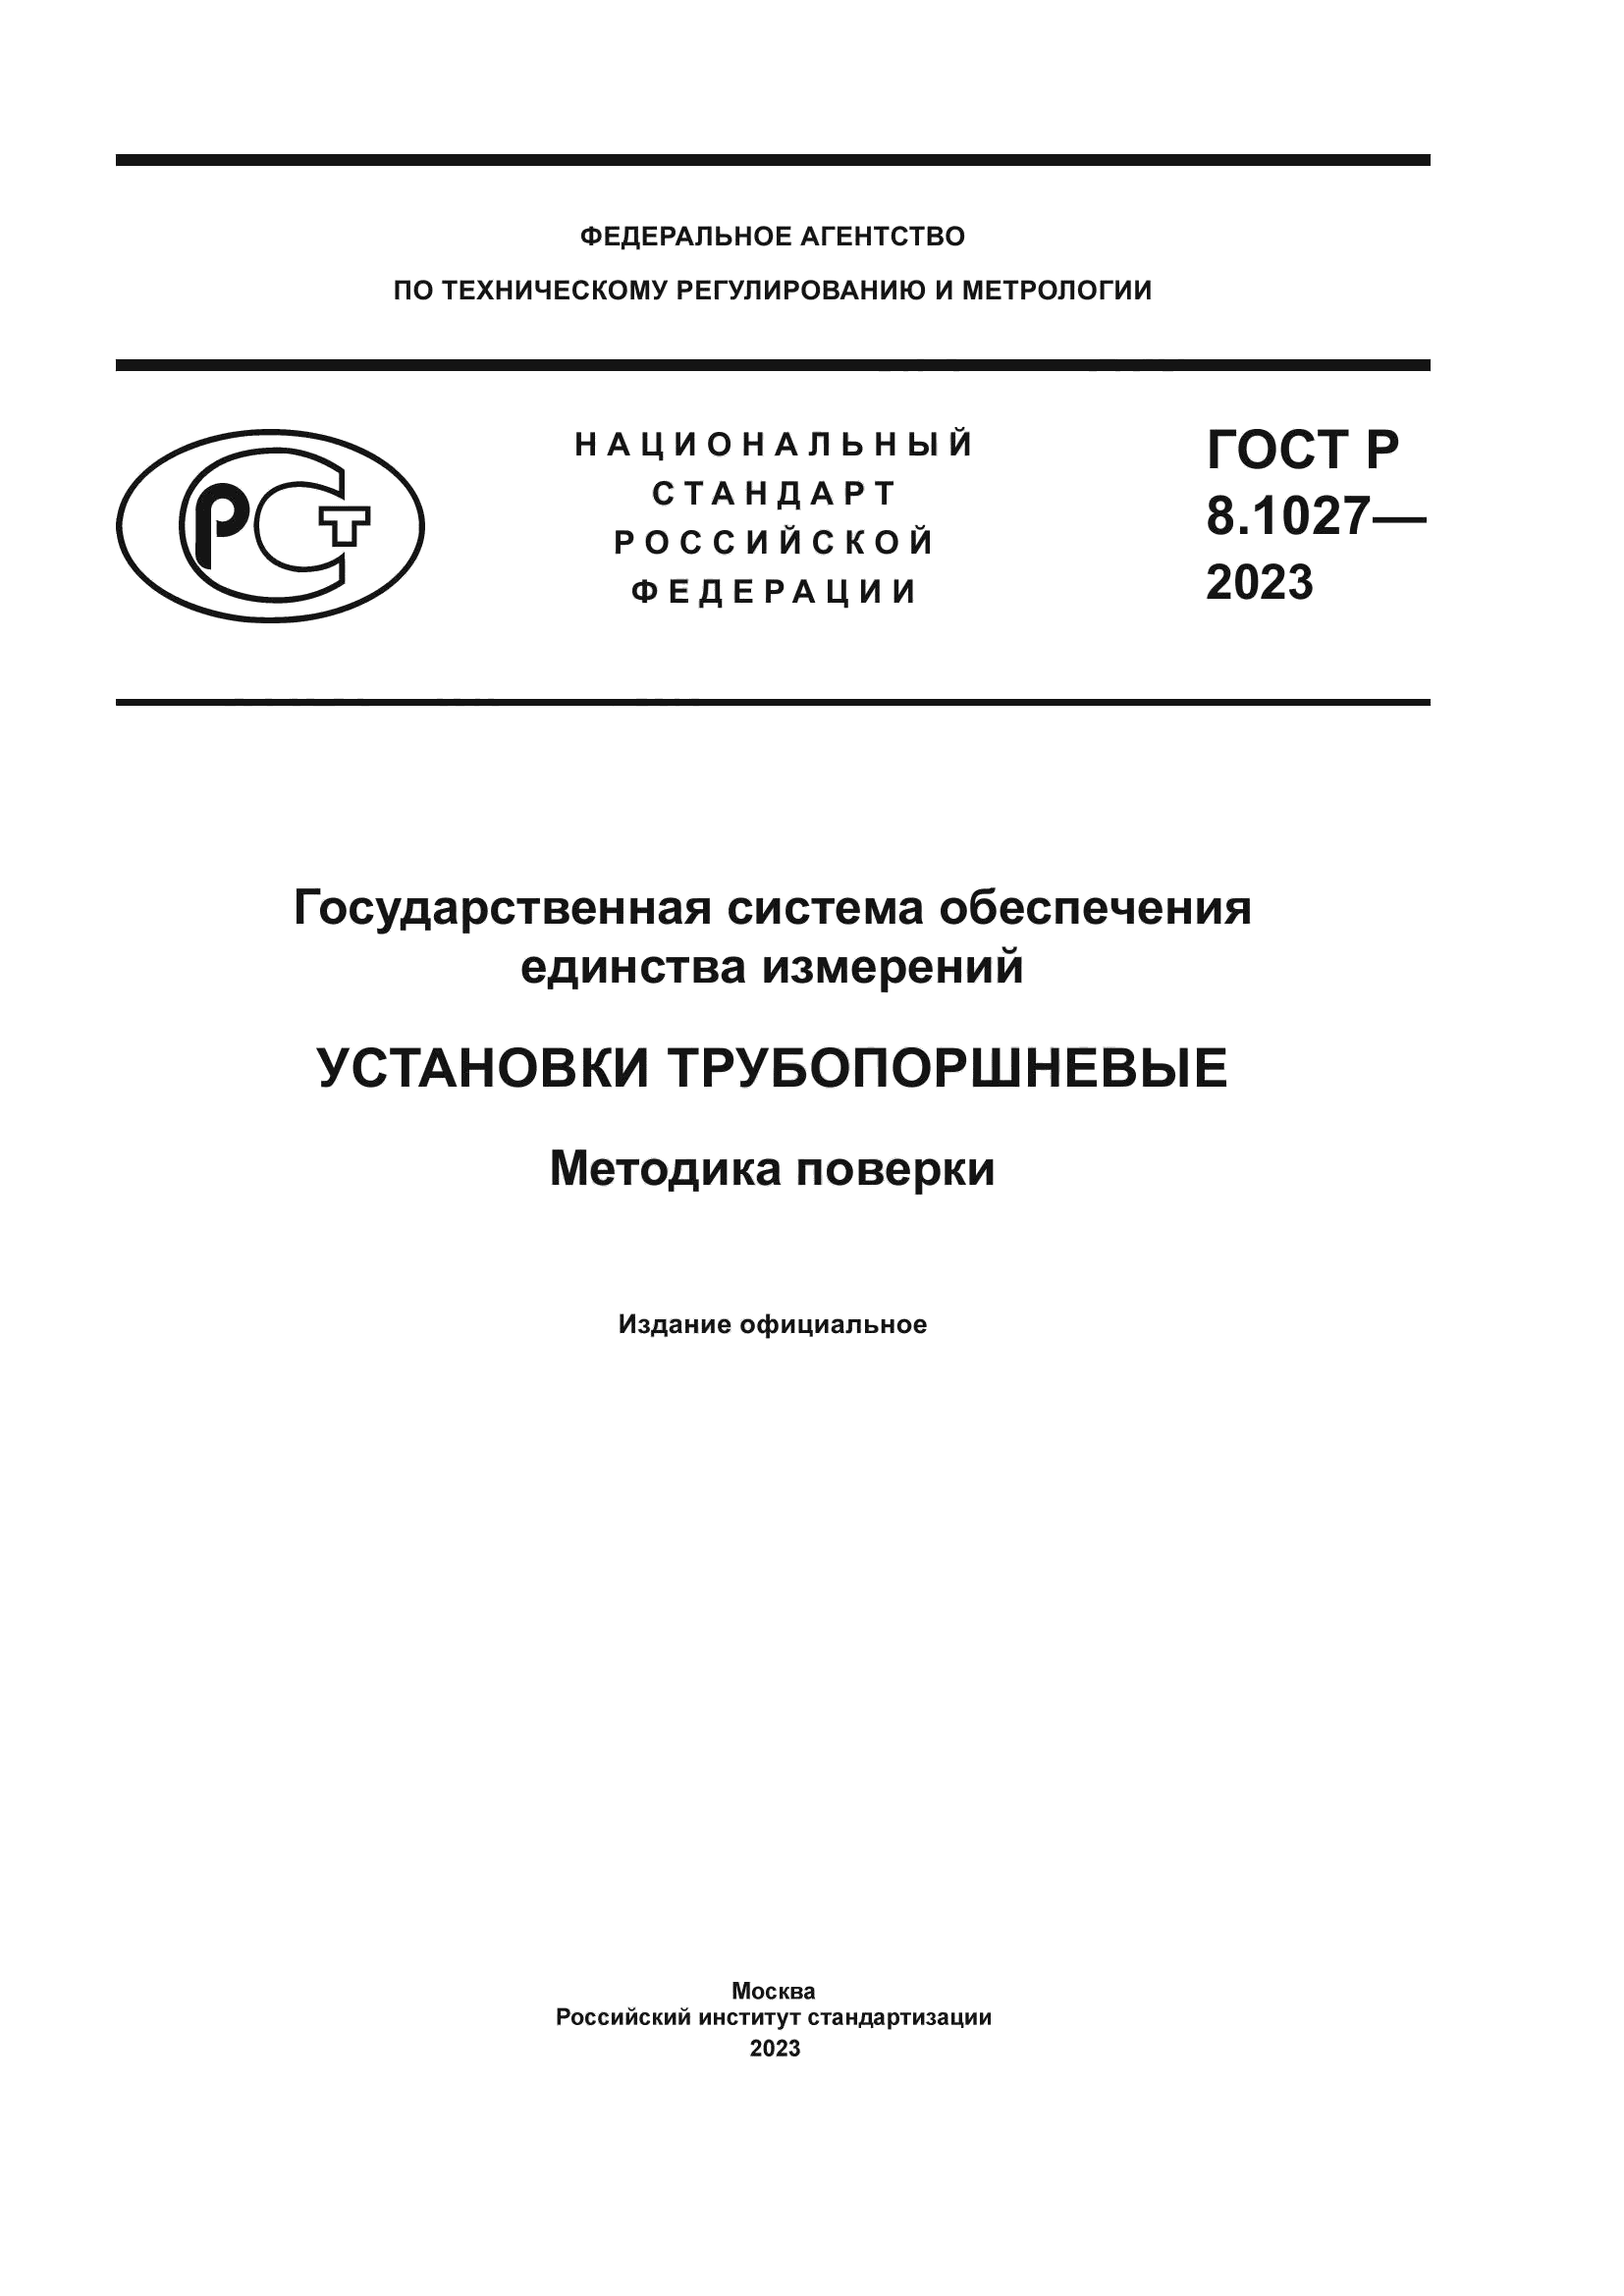 ГОСТ Р 8.1027-2023